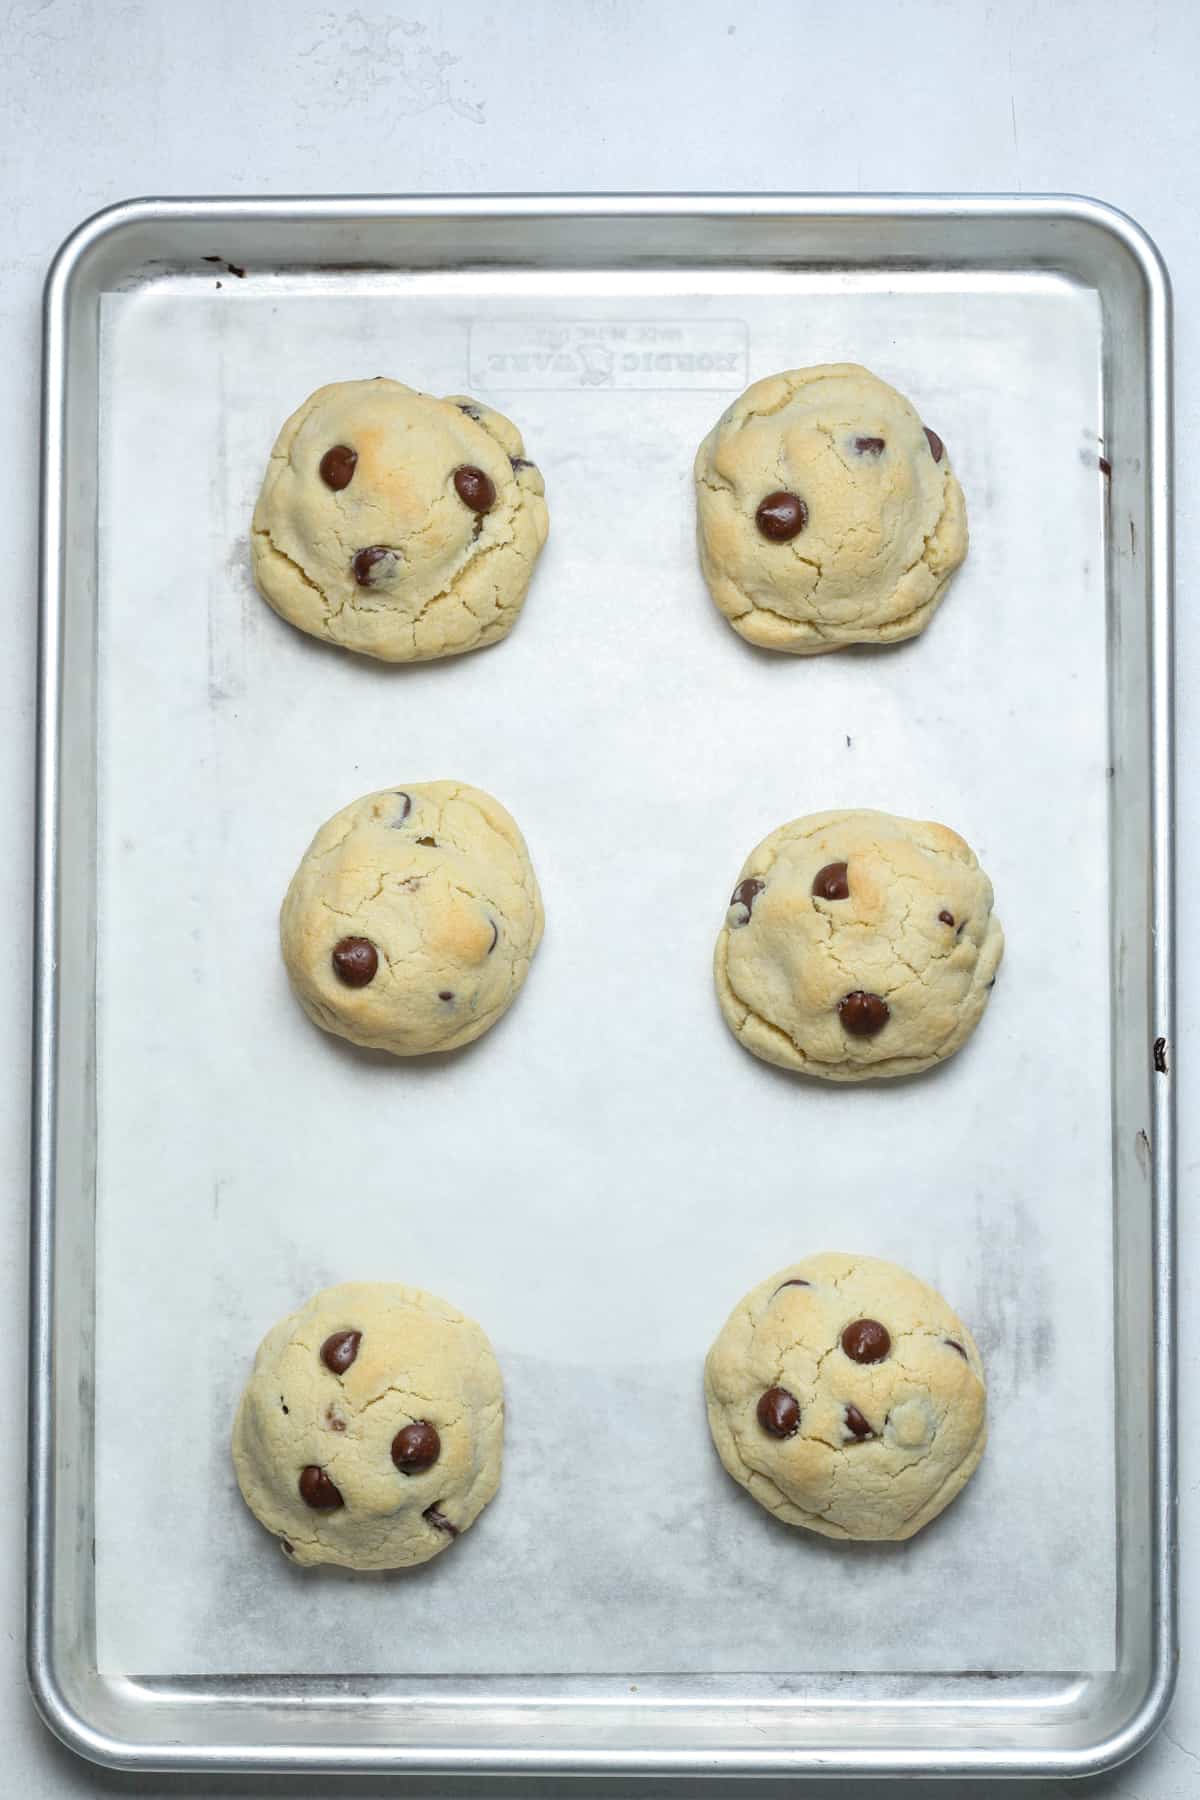 Baked stuffed cookies on pan